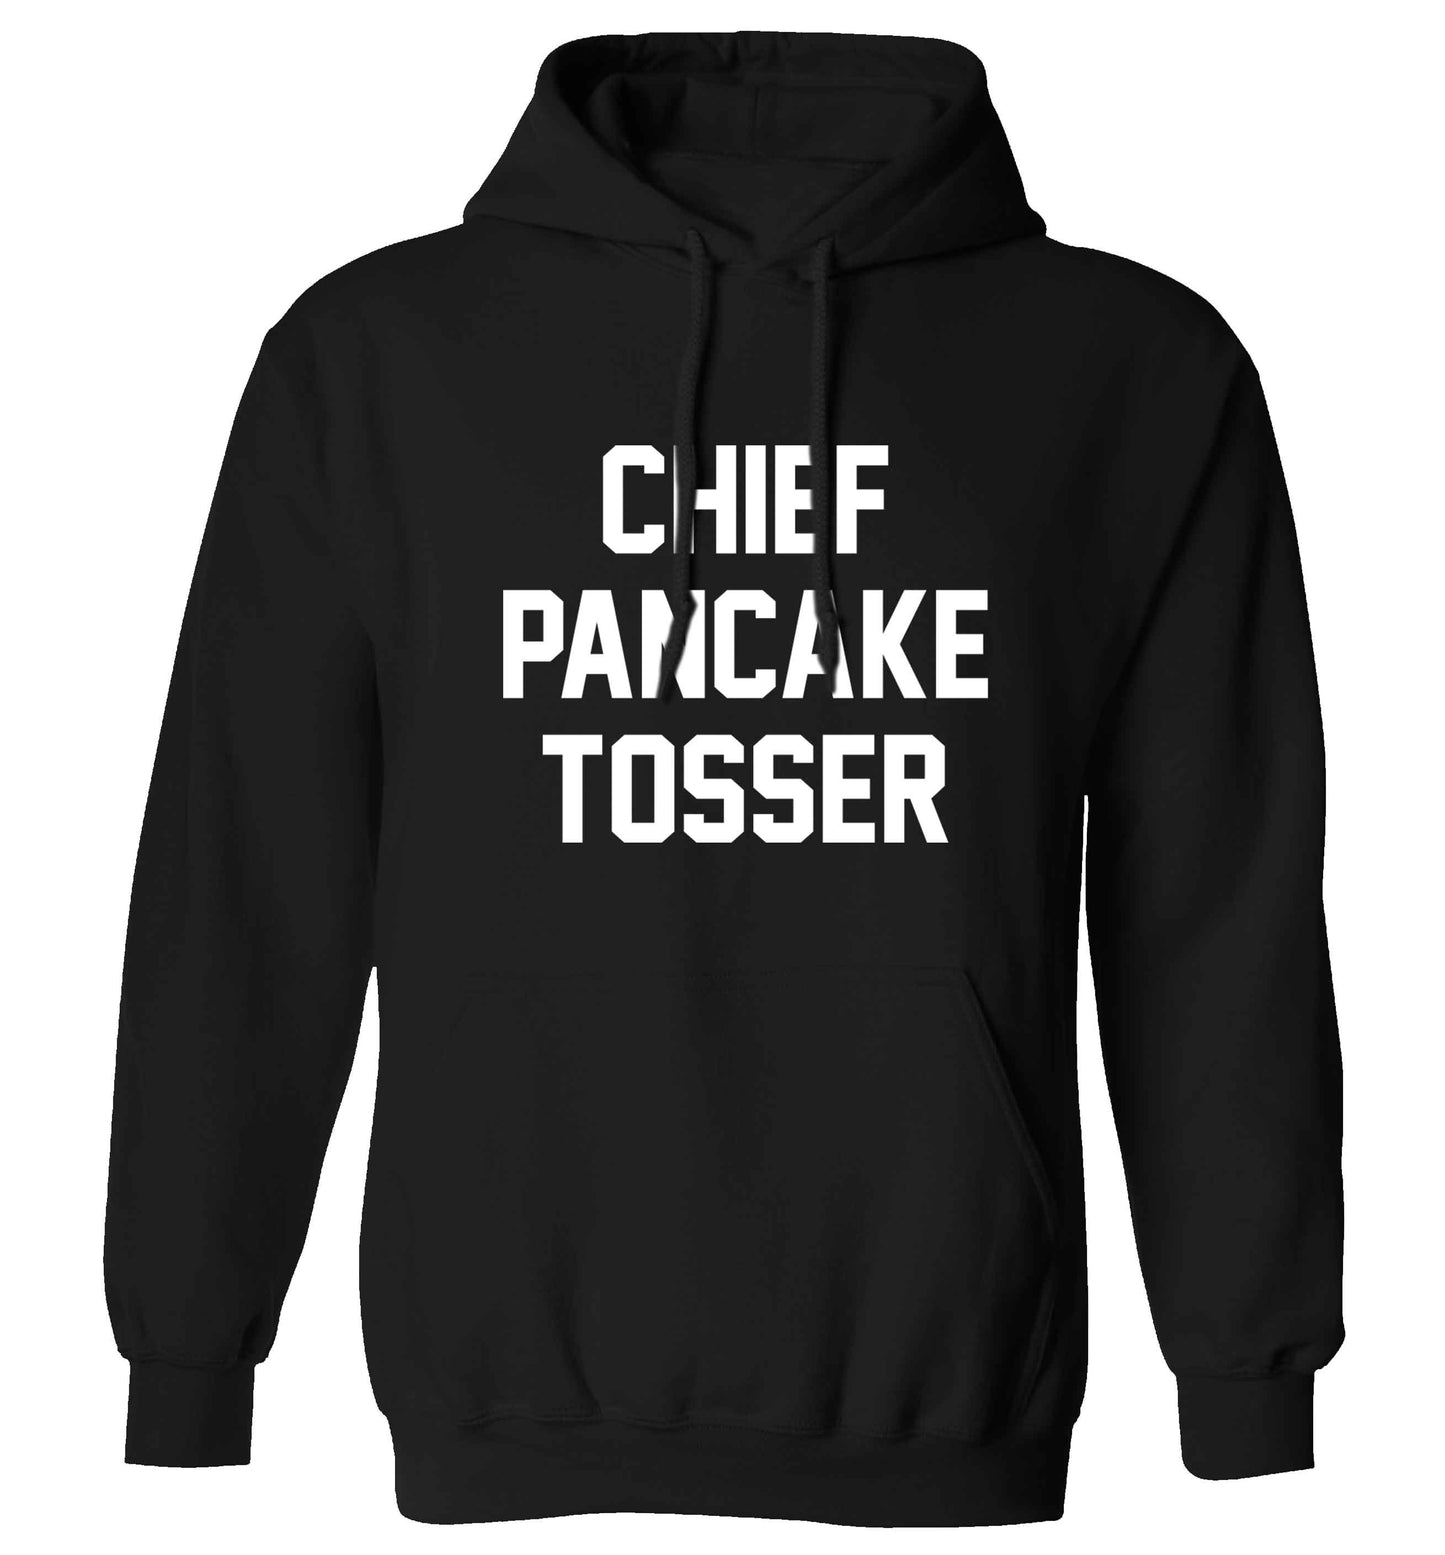 Chief pancake tosser adults unisex black hoodie 2XL